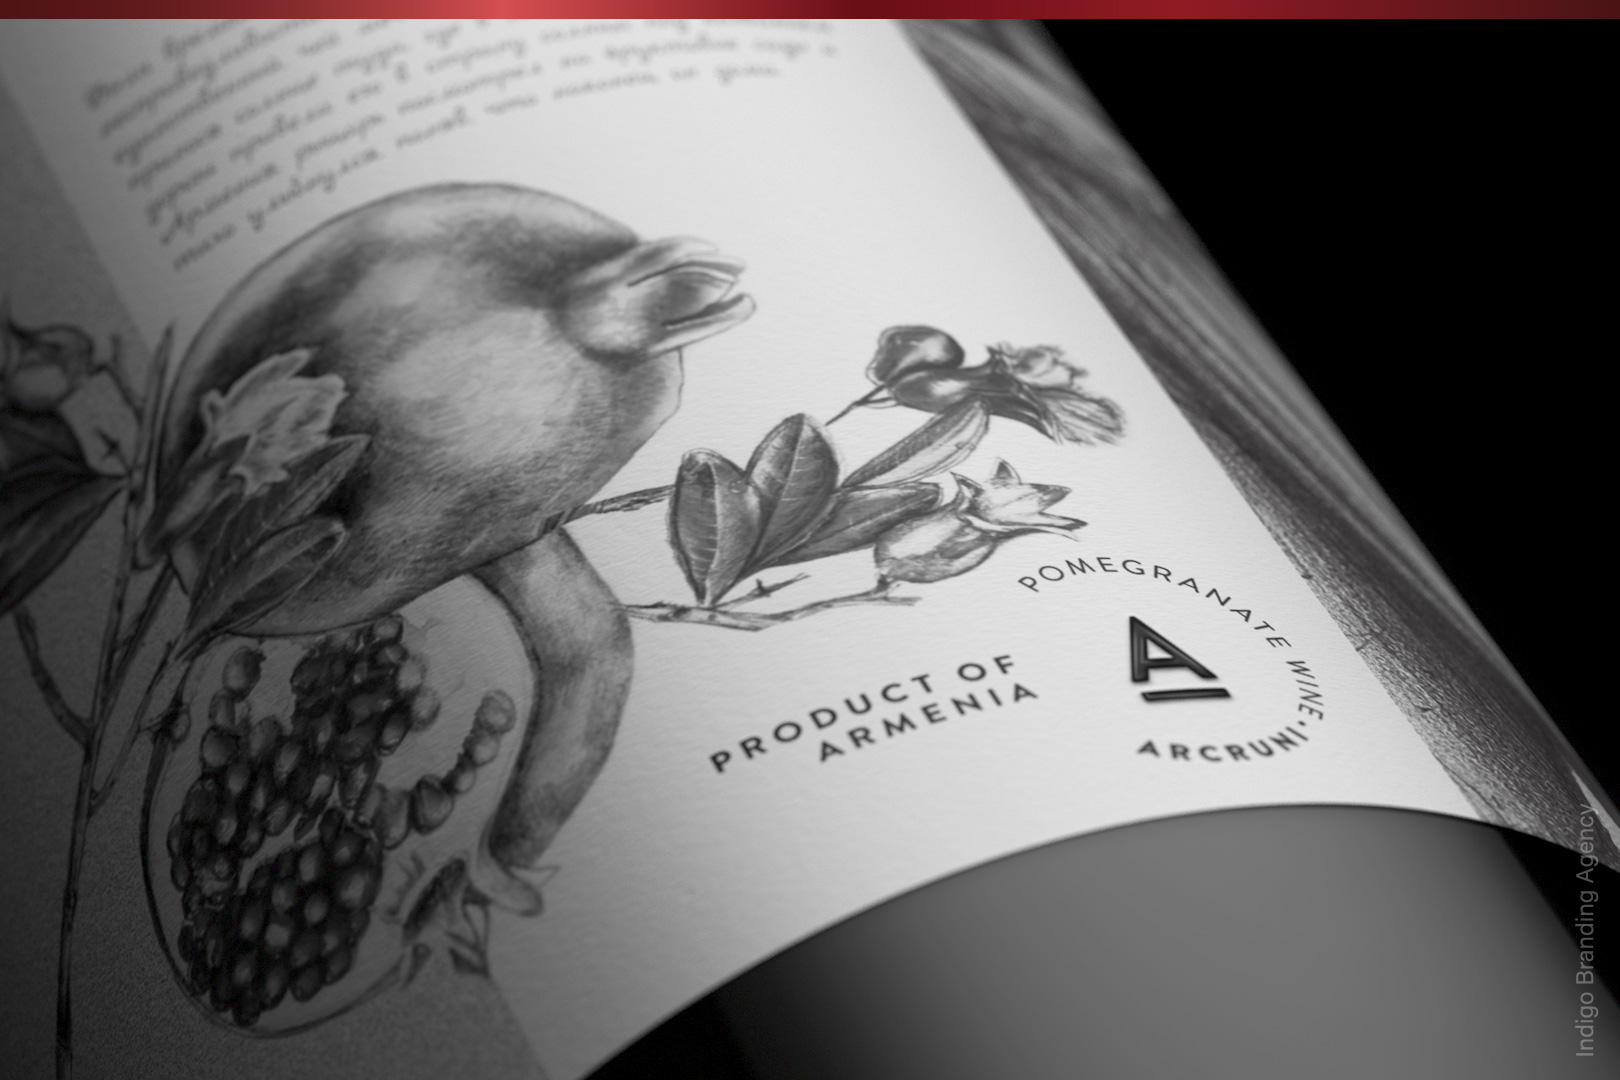 Arcruni wine branding and labeling by Indigo branding